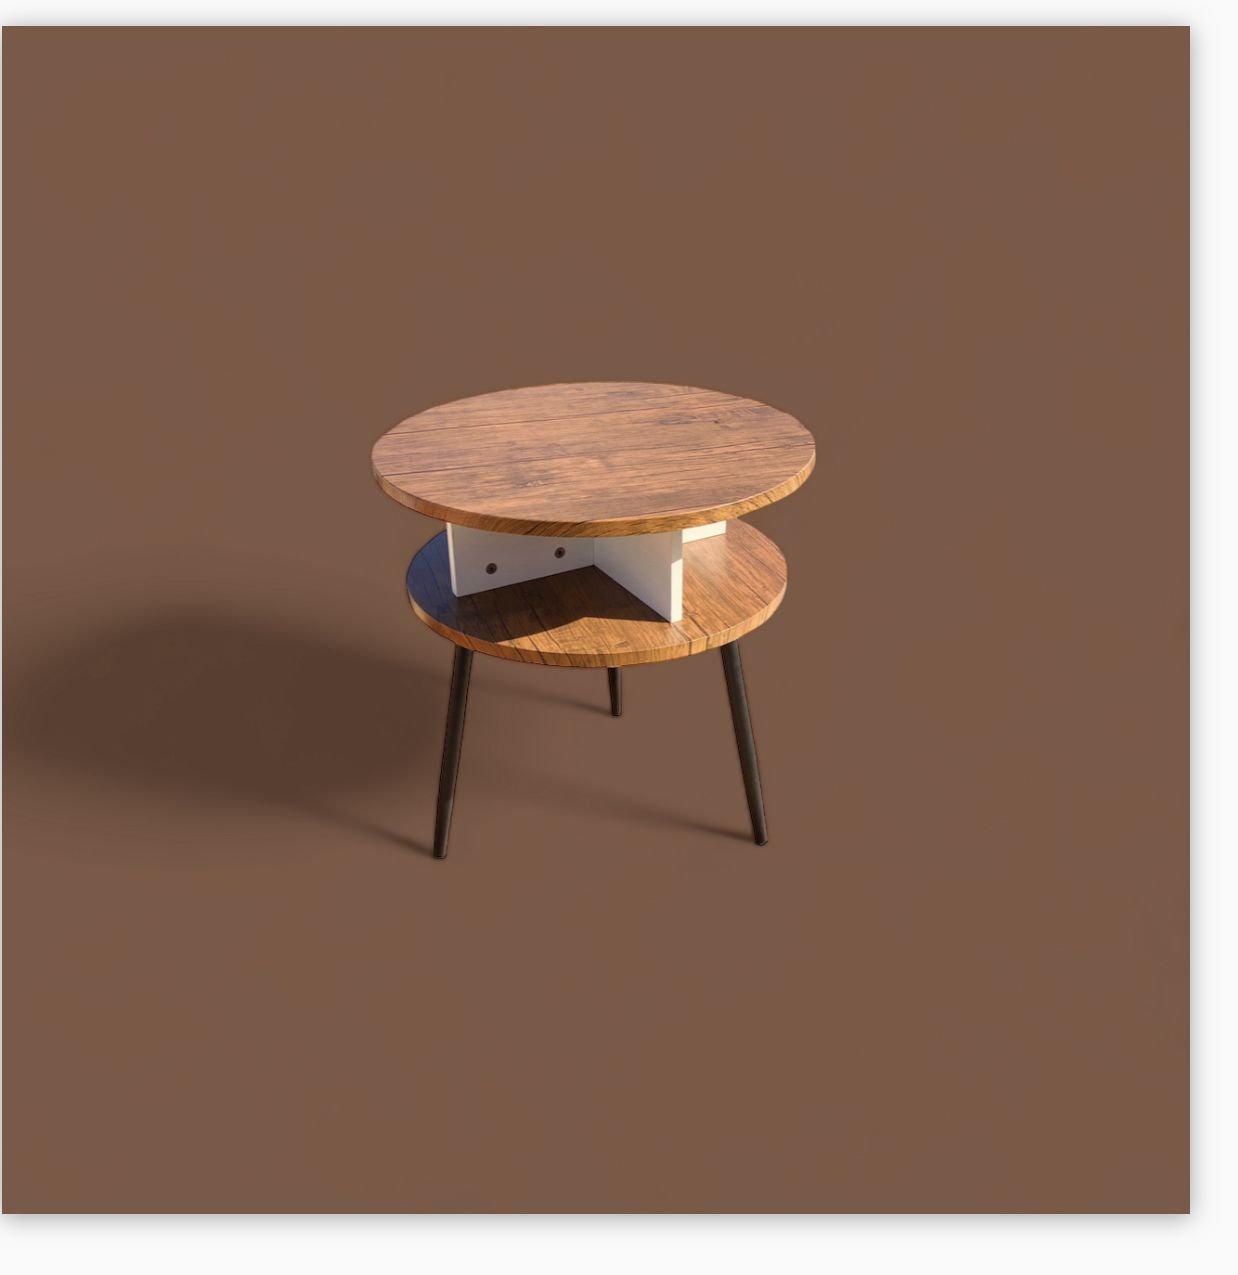 Table de coin ou table de cafe ou table basse Dakar Senegal Afridiscount ecommerce sn mobilier meubleDiscount Meuble